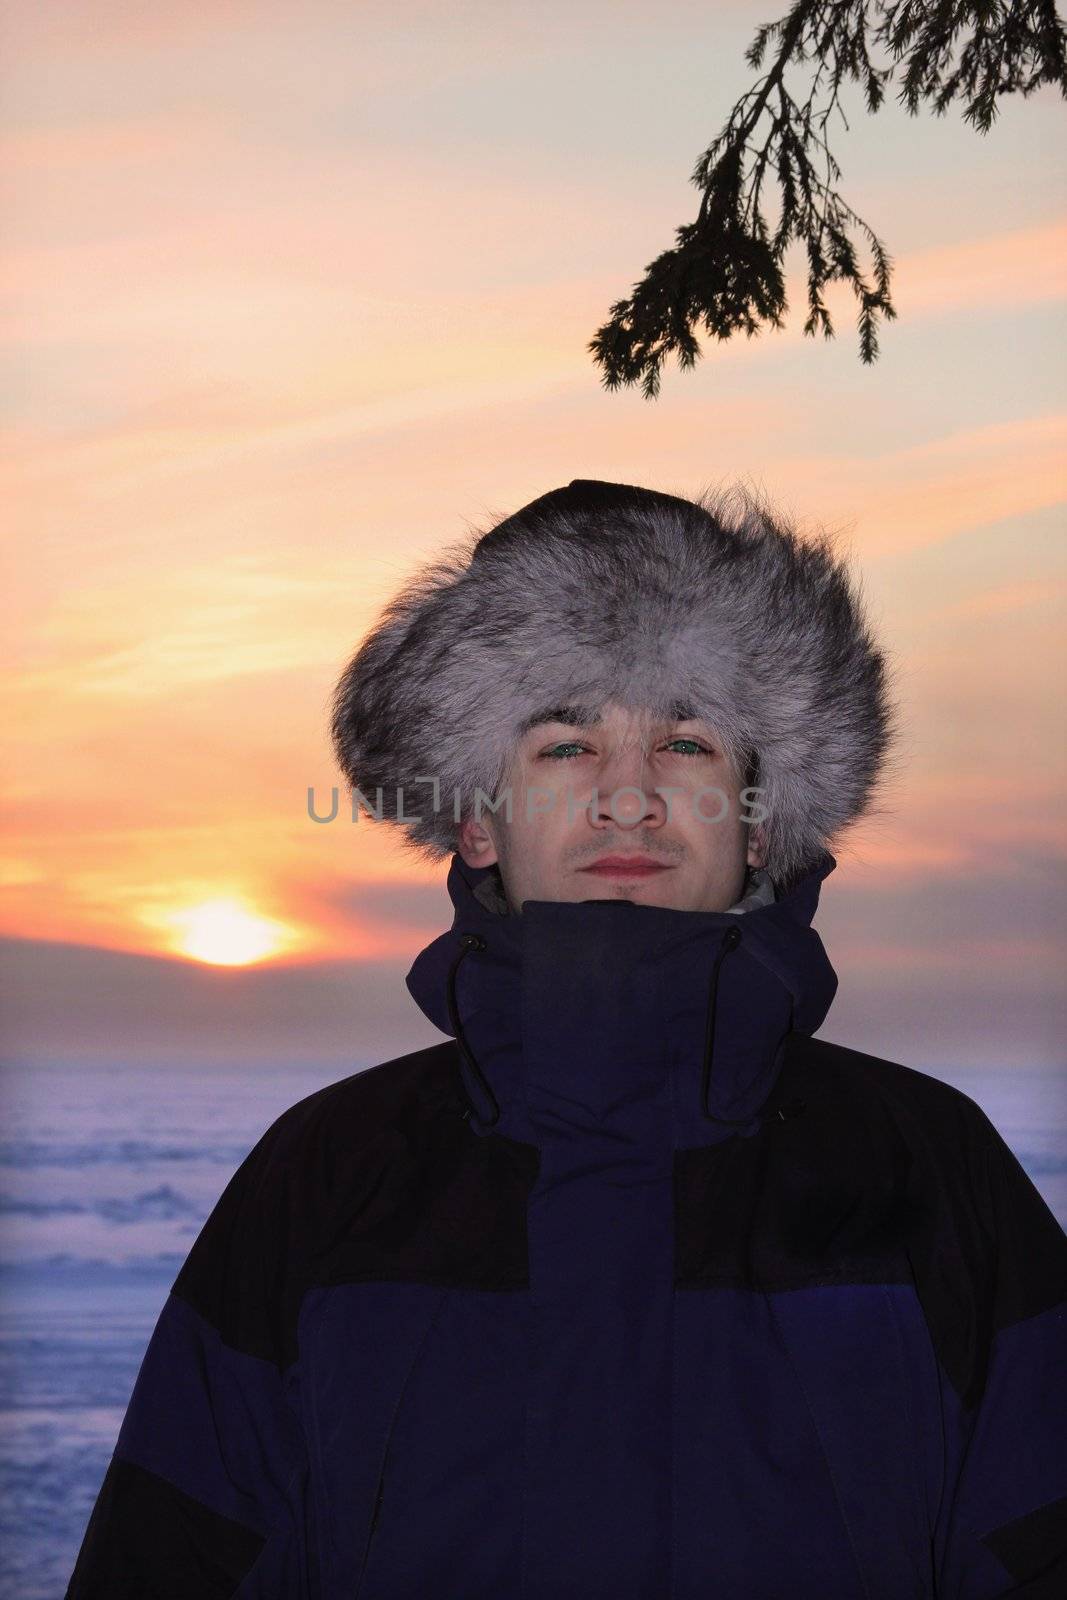 man  in a fur cap in winter sunset by Metanna